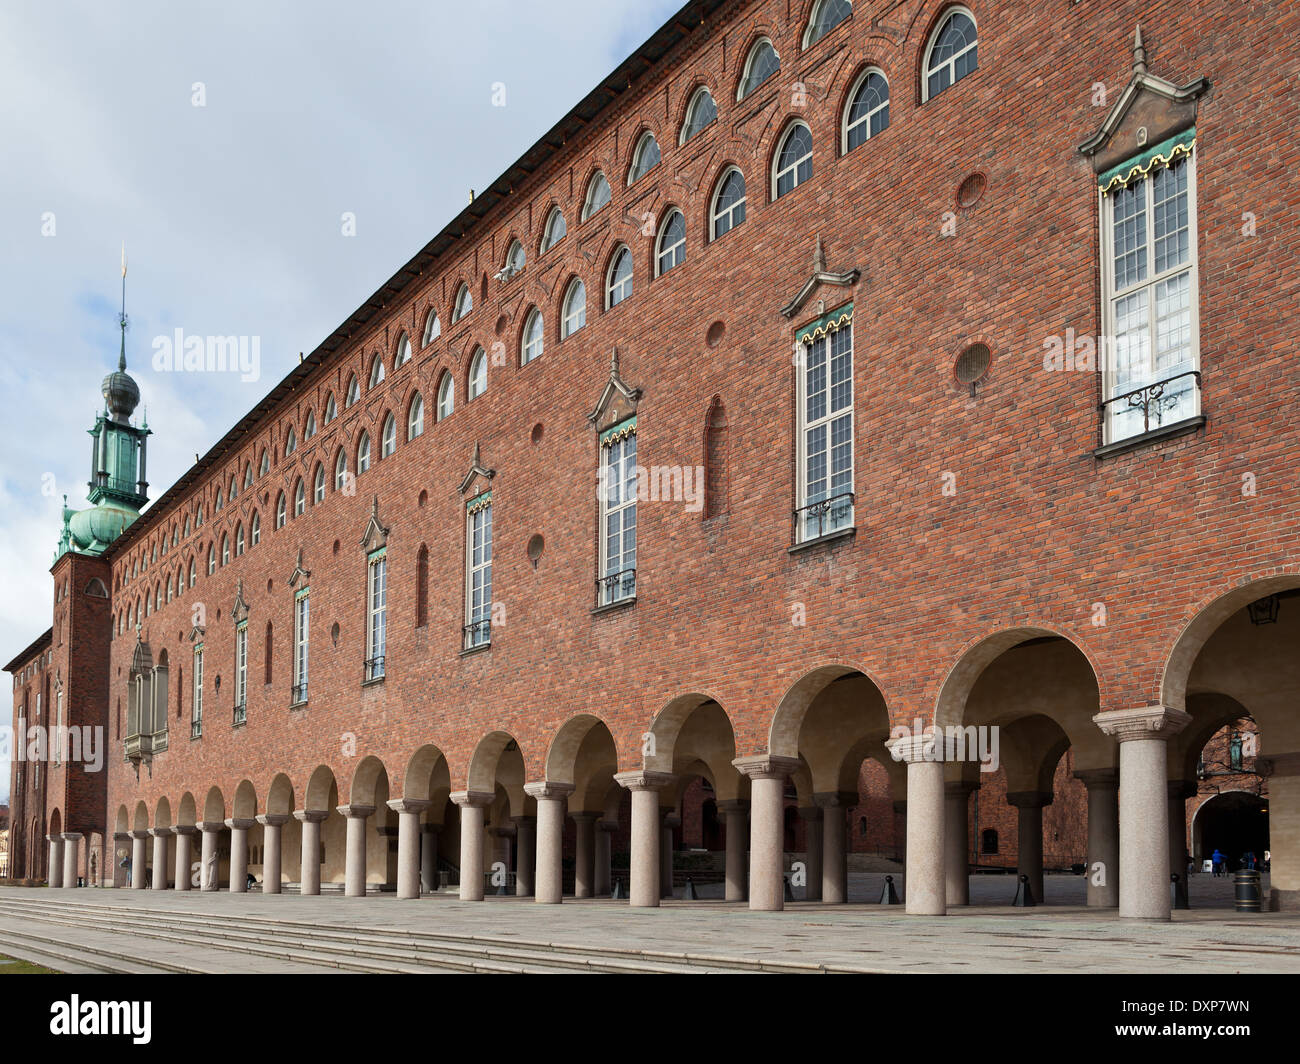 Stockholm Sweden June 11 2017 Architectural Stock Photo 1070962562